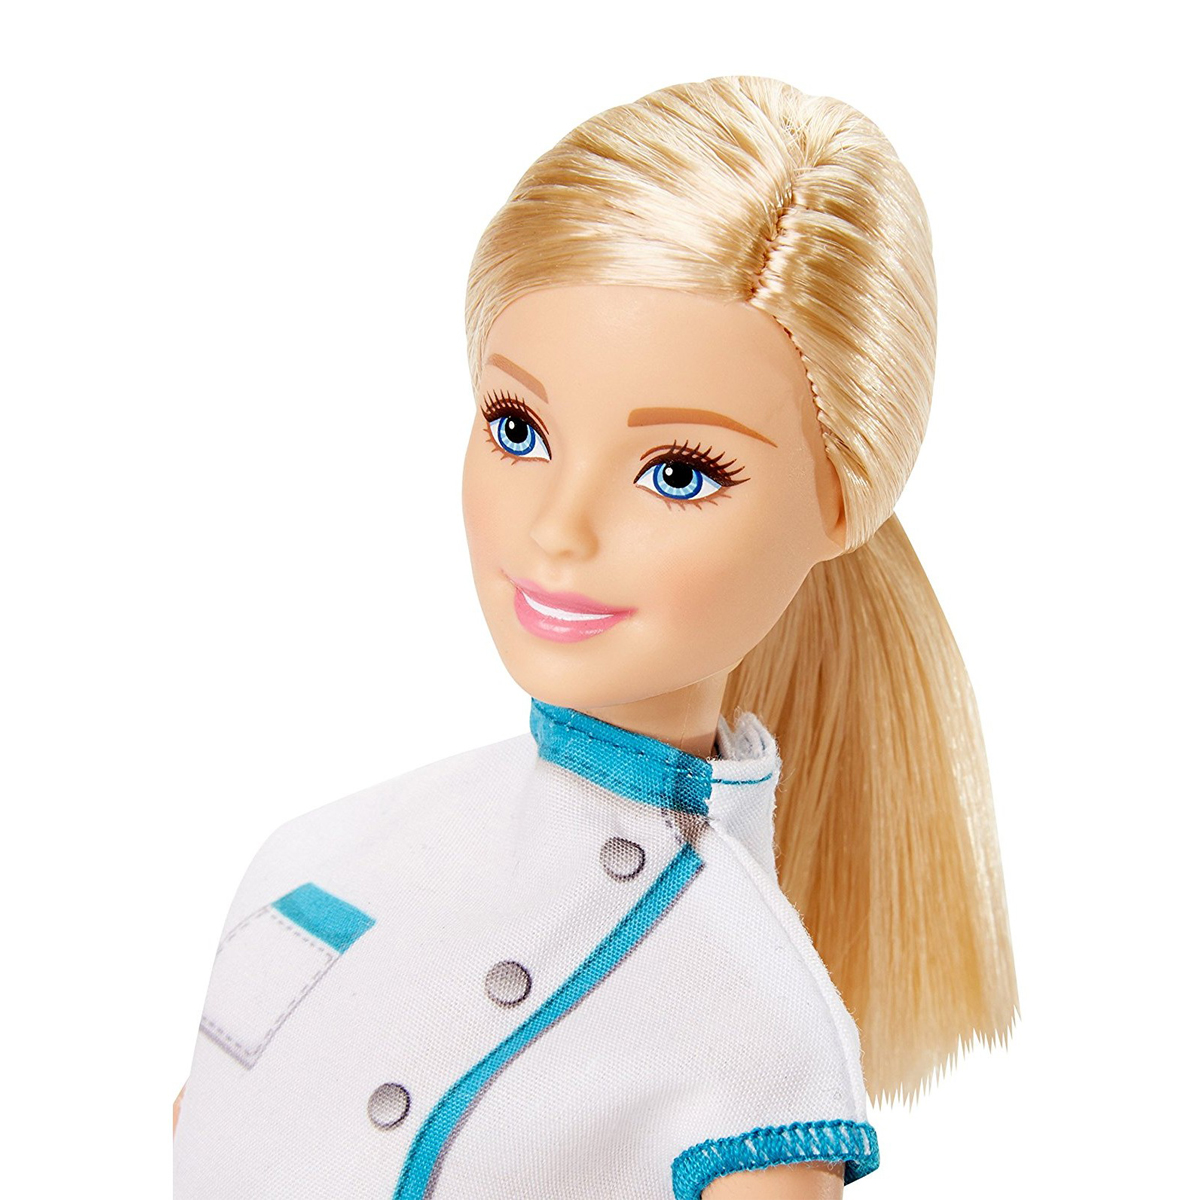 Spaghetti Chef Barbie for Girls